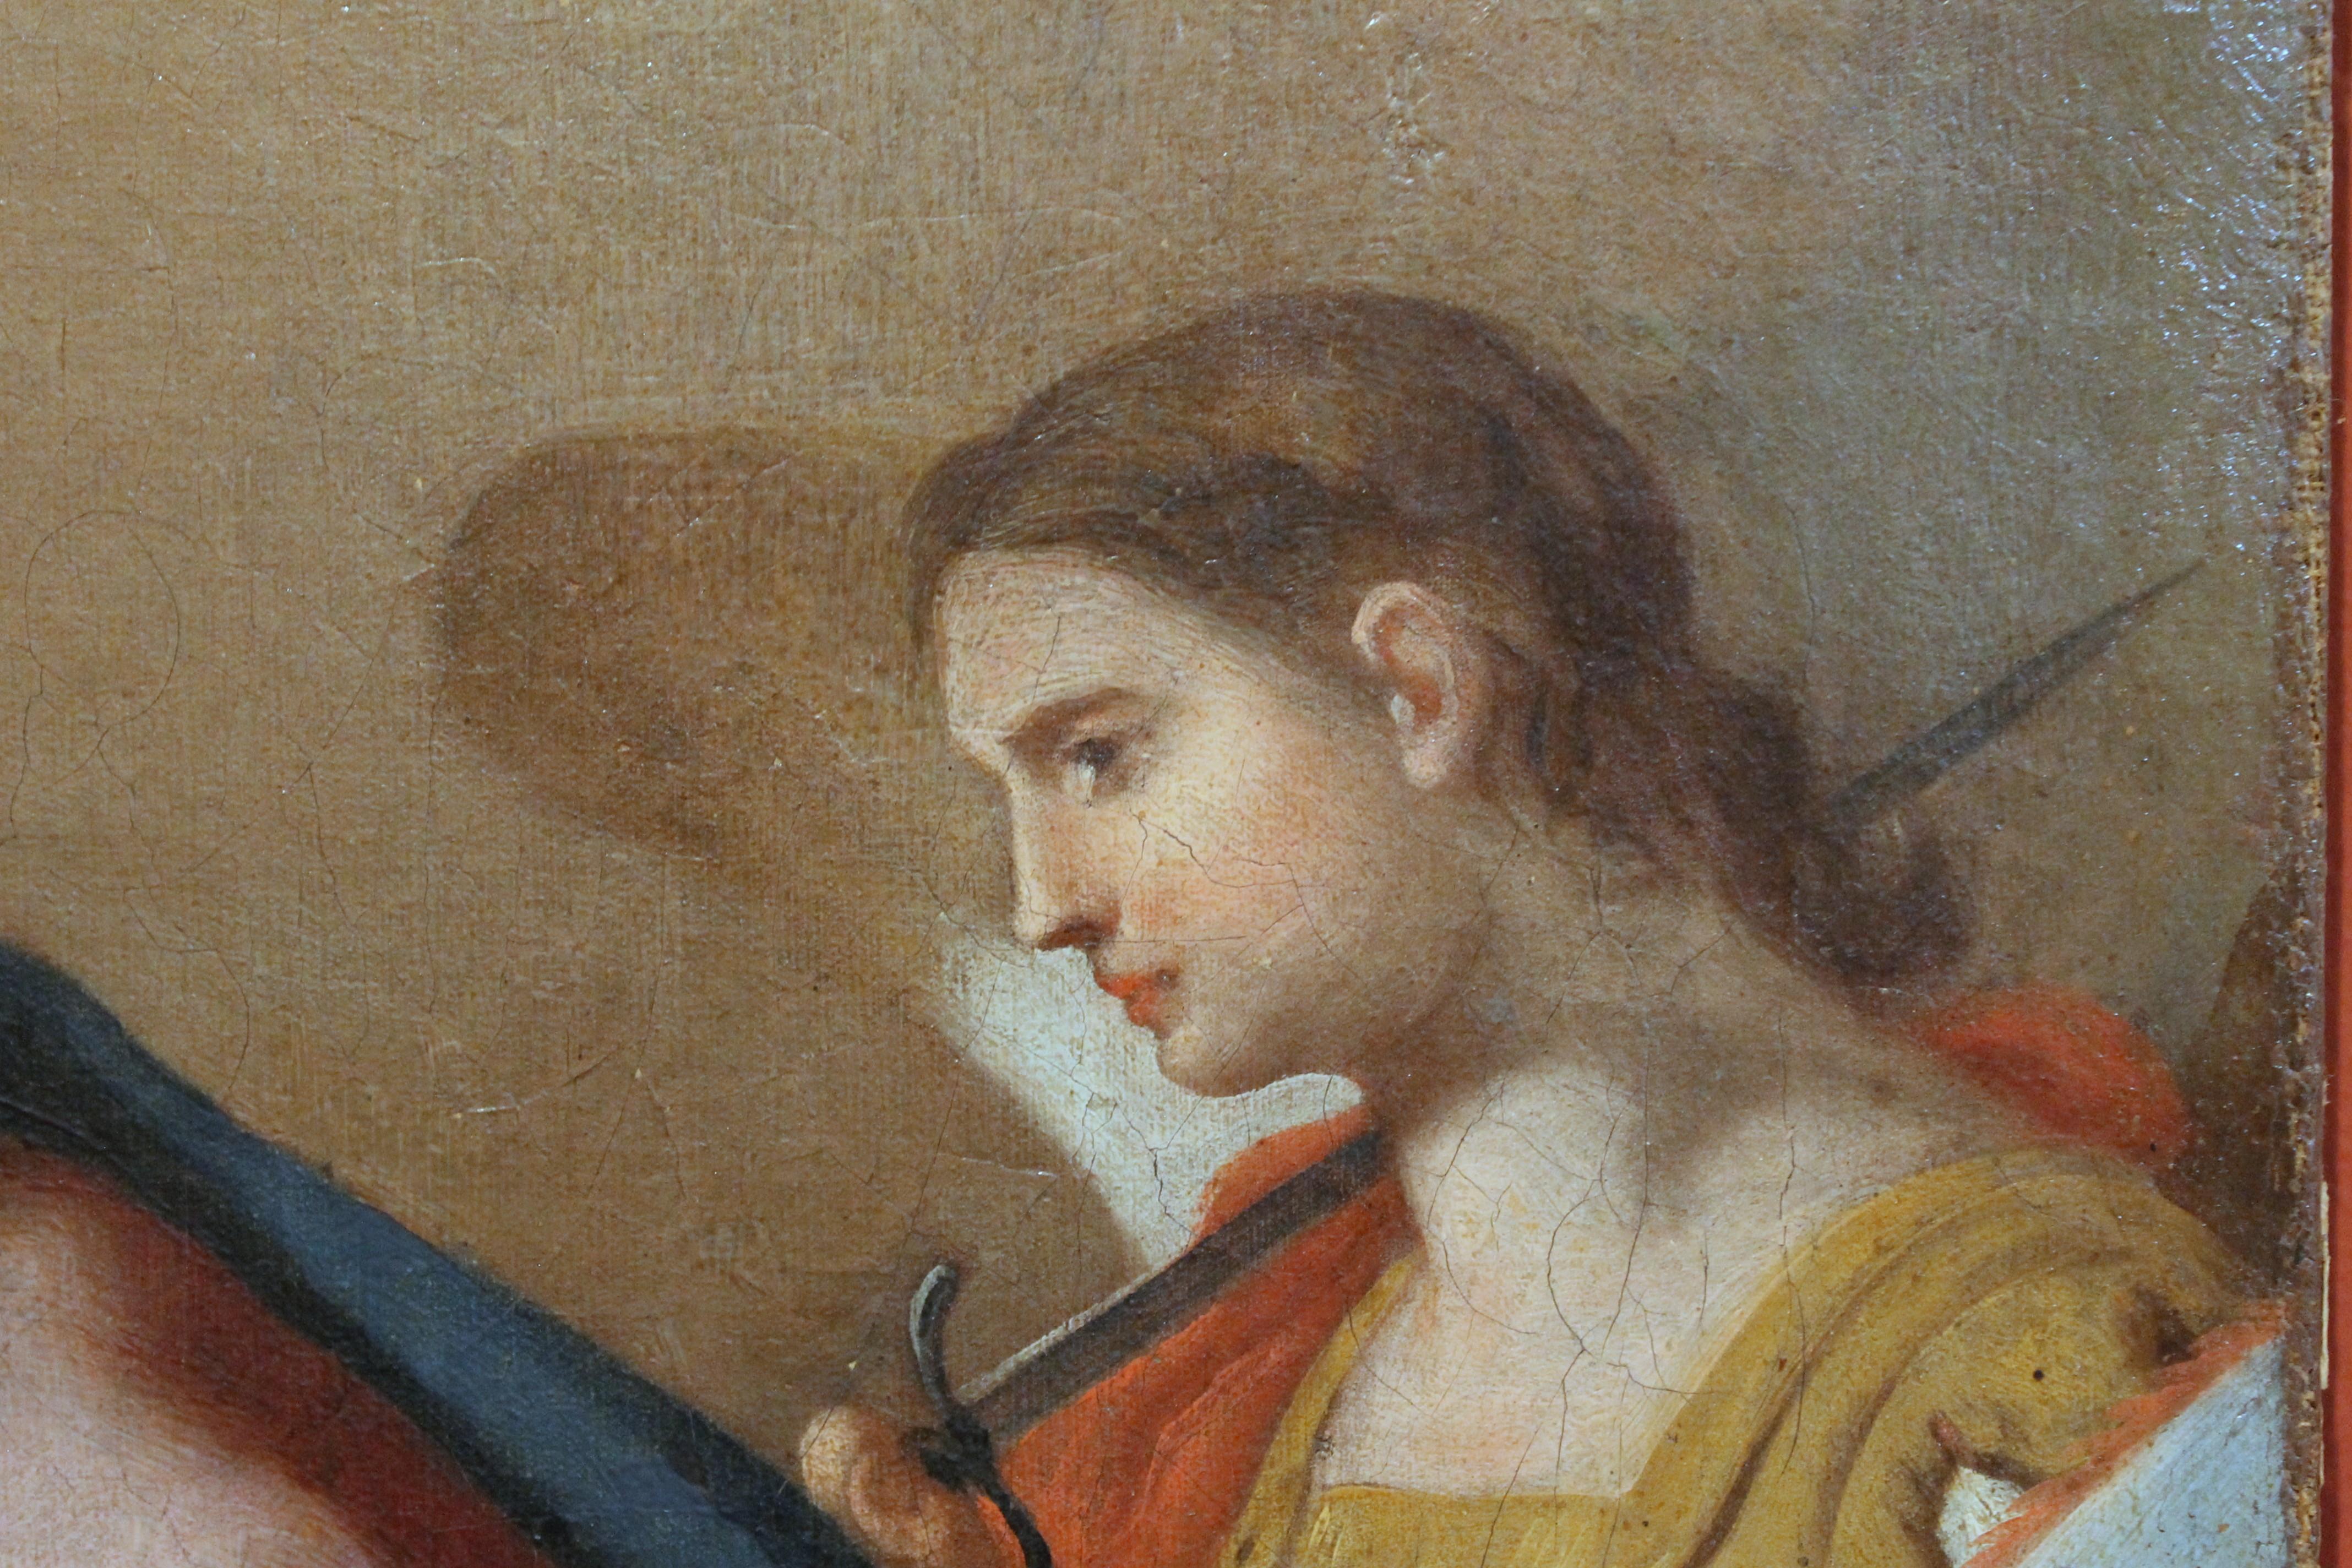 The Death of Saint Joseph, Italian Baroque Religious Scene Oil on Canvas Painting 4